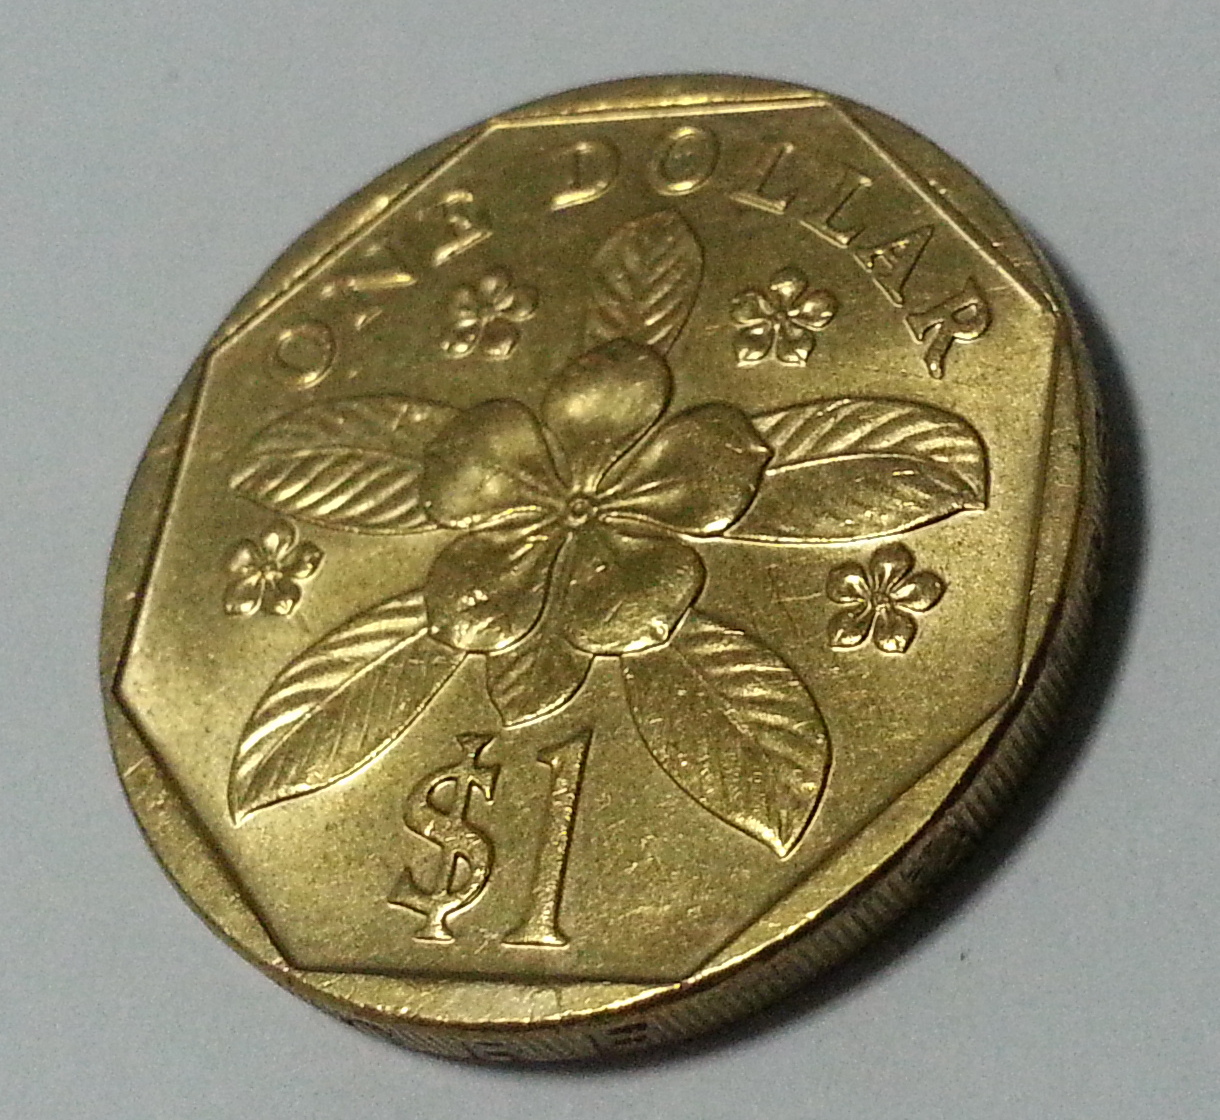 Singapore Coins Second Floral Series 1985 2017 Jolovecoins